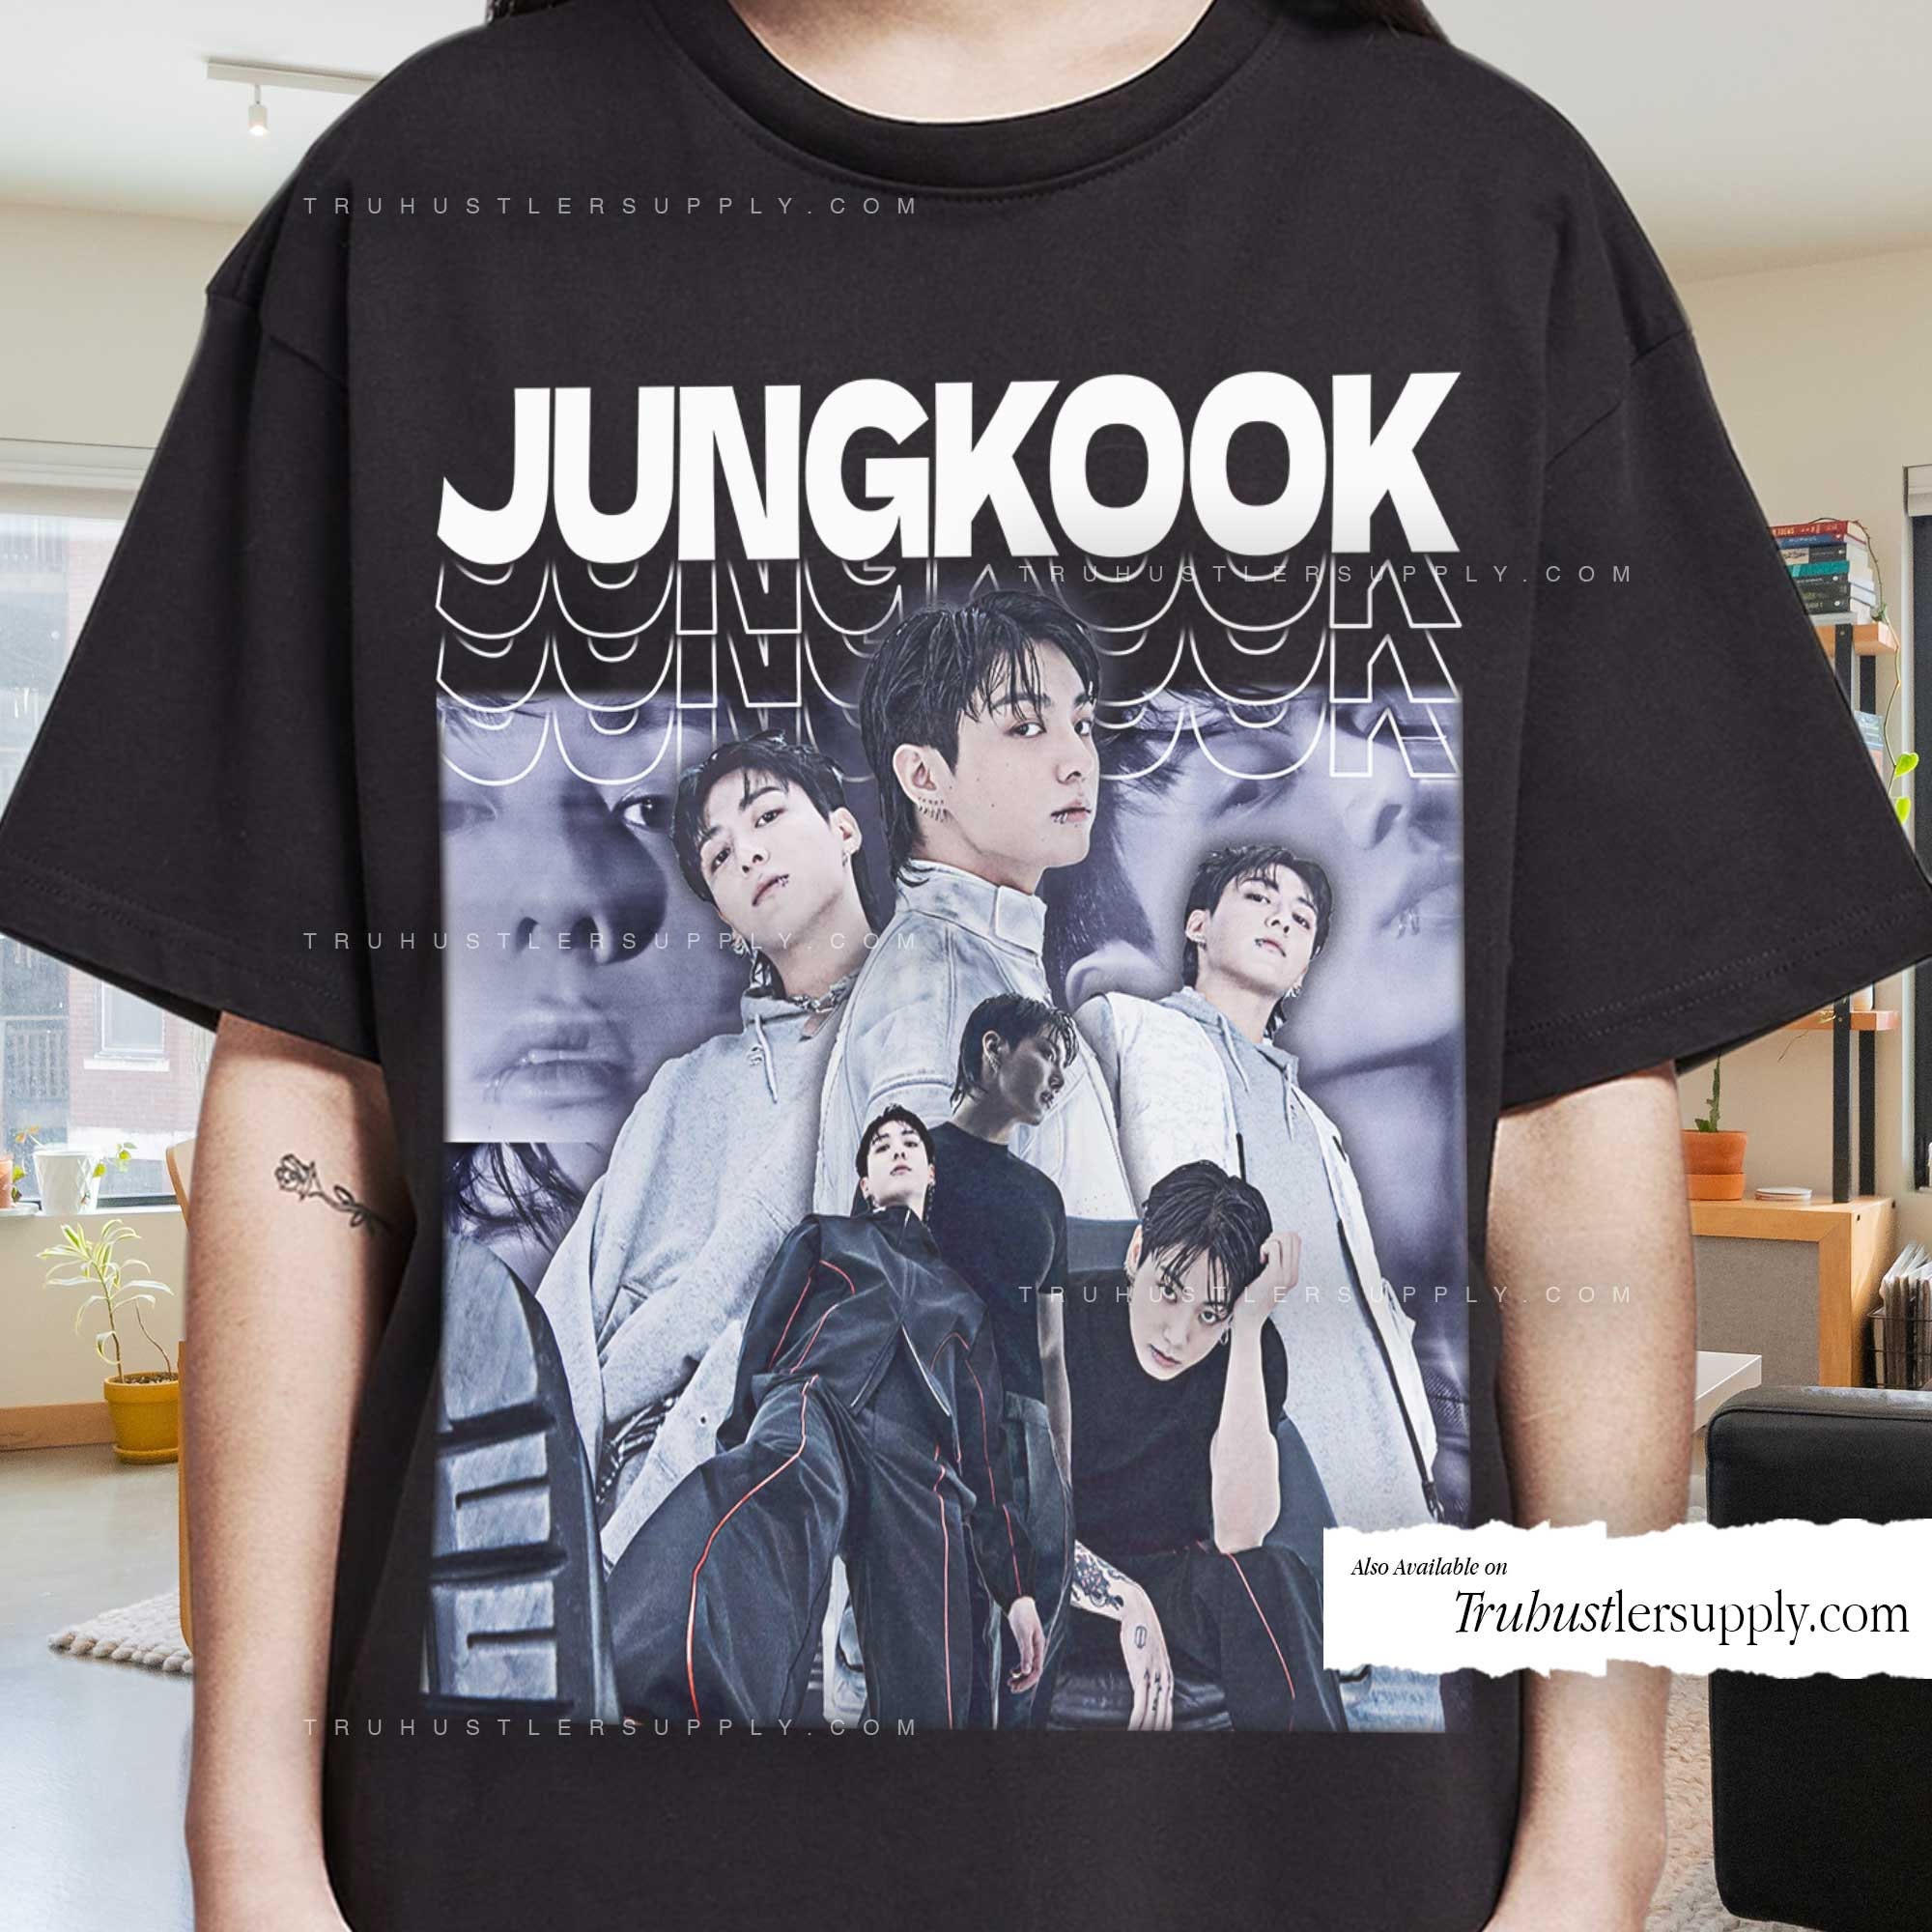 BTS Jungkook Kpop Sweatshirt 3D Tee V3 Bangtan JK Merch 